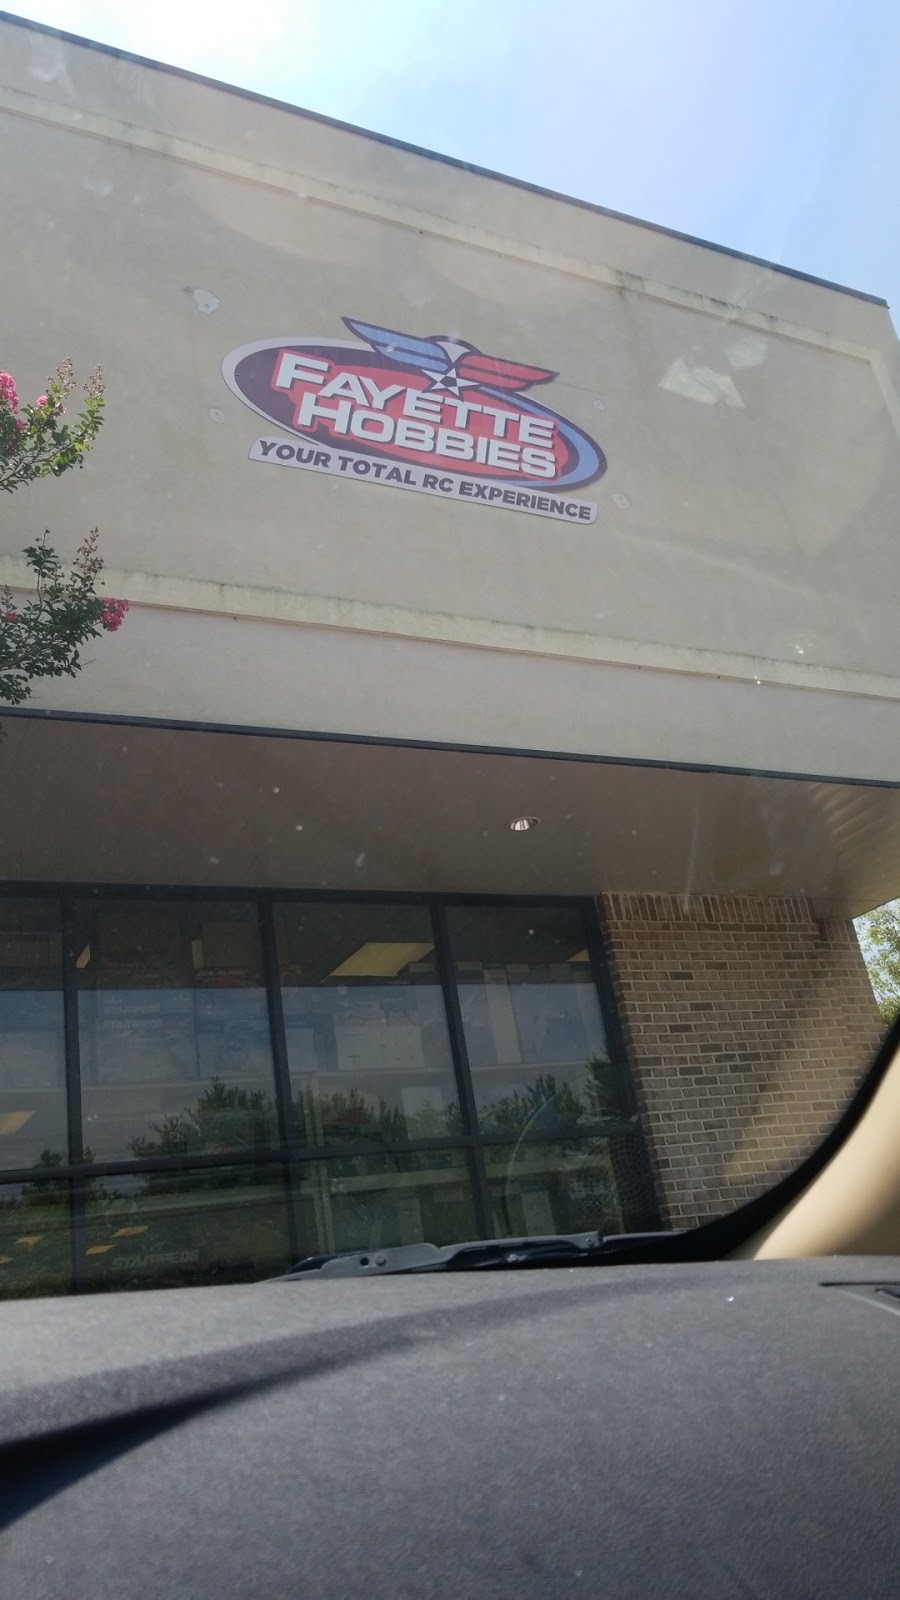 Fayette Hobbies | 6 Falcon Dr Ste 100, Peachtree City, GA 30269 | Phone: (678) 369-7459